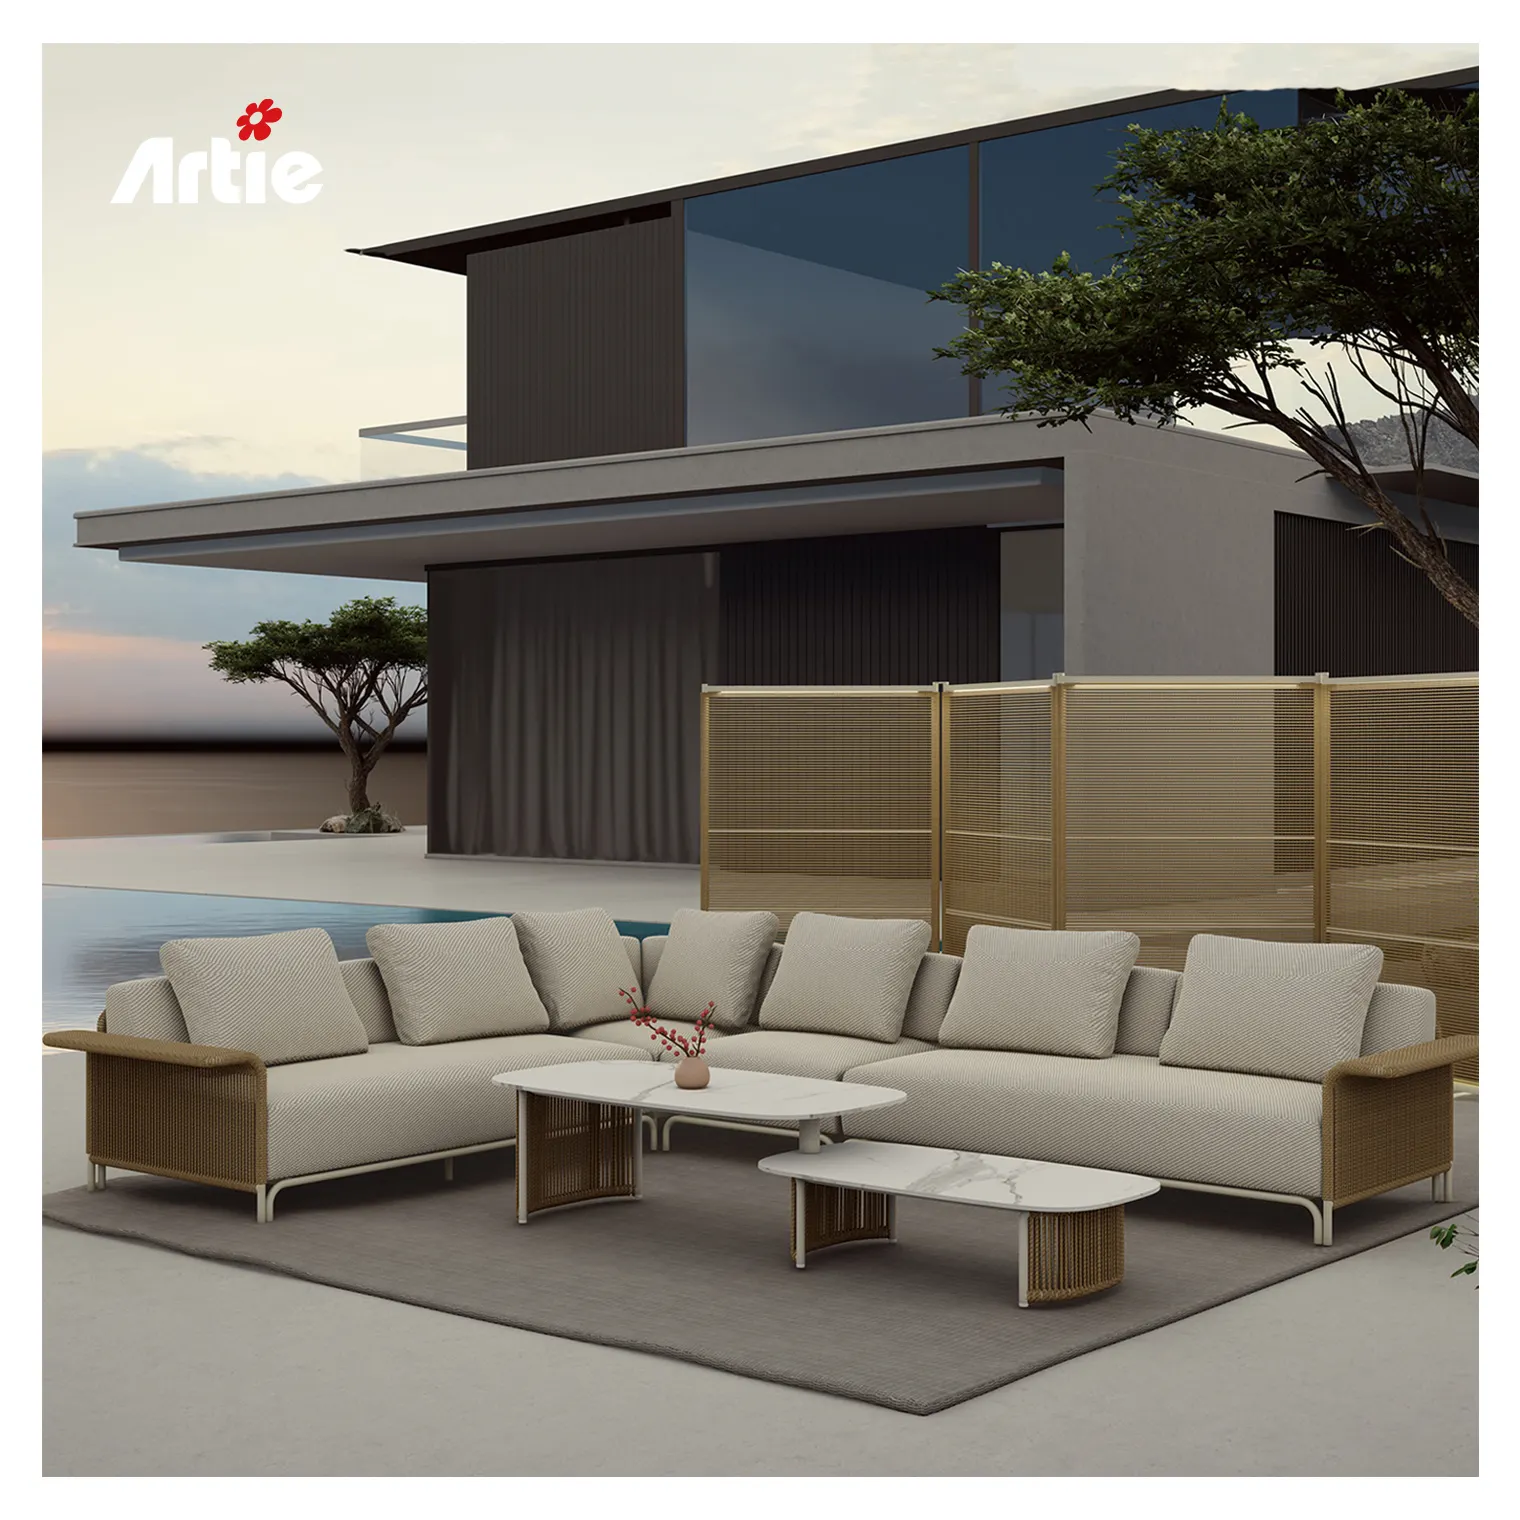 Artie High-End Hotel möbel Outdoor Schnitts ofa Allwetter Korb möbel L-Form Garten Sofa Sets